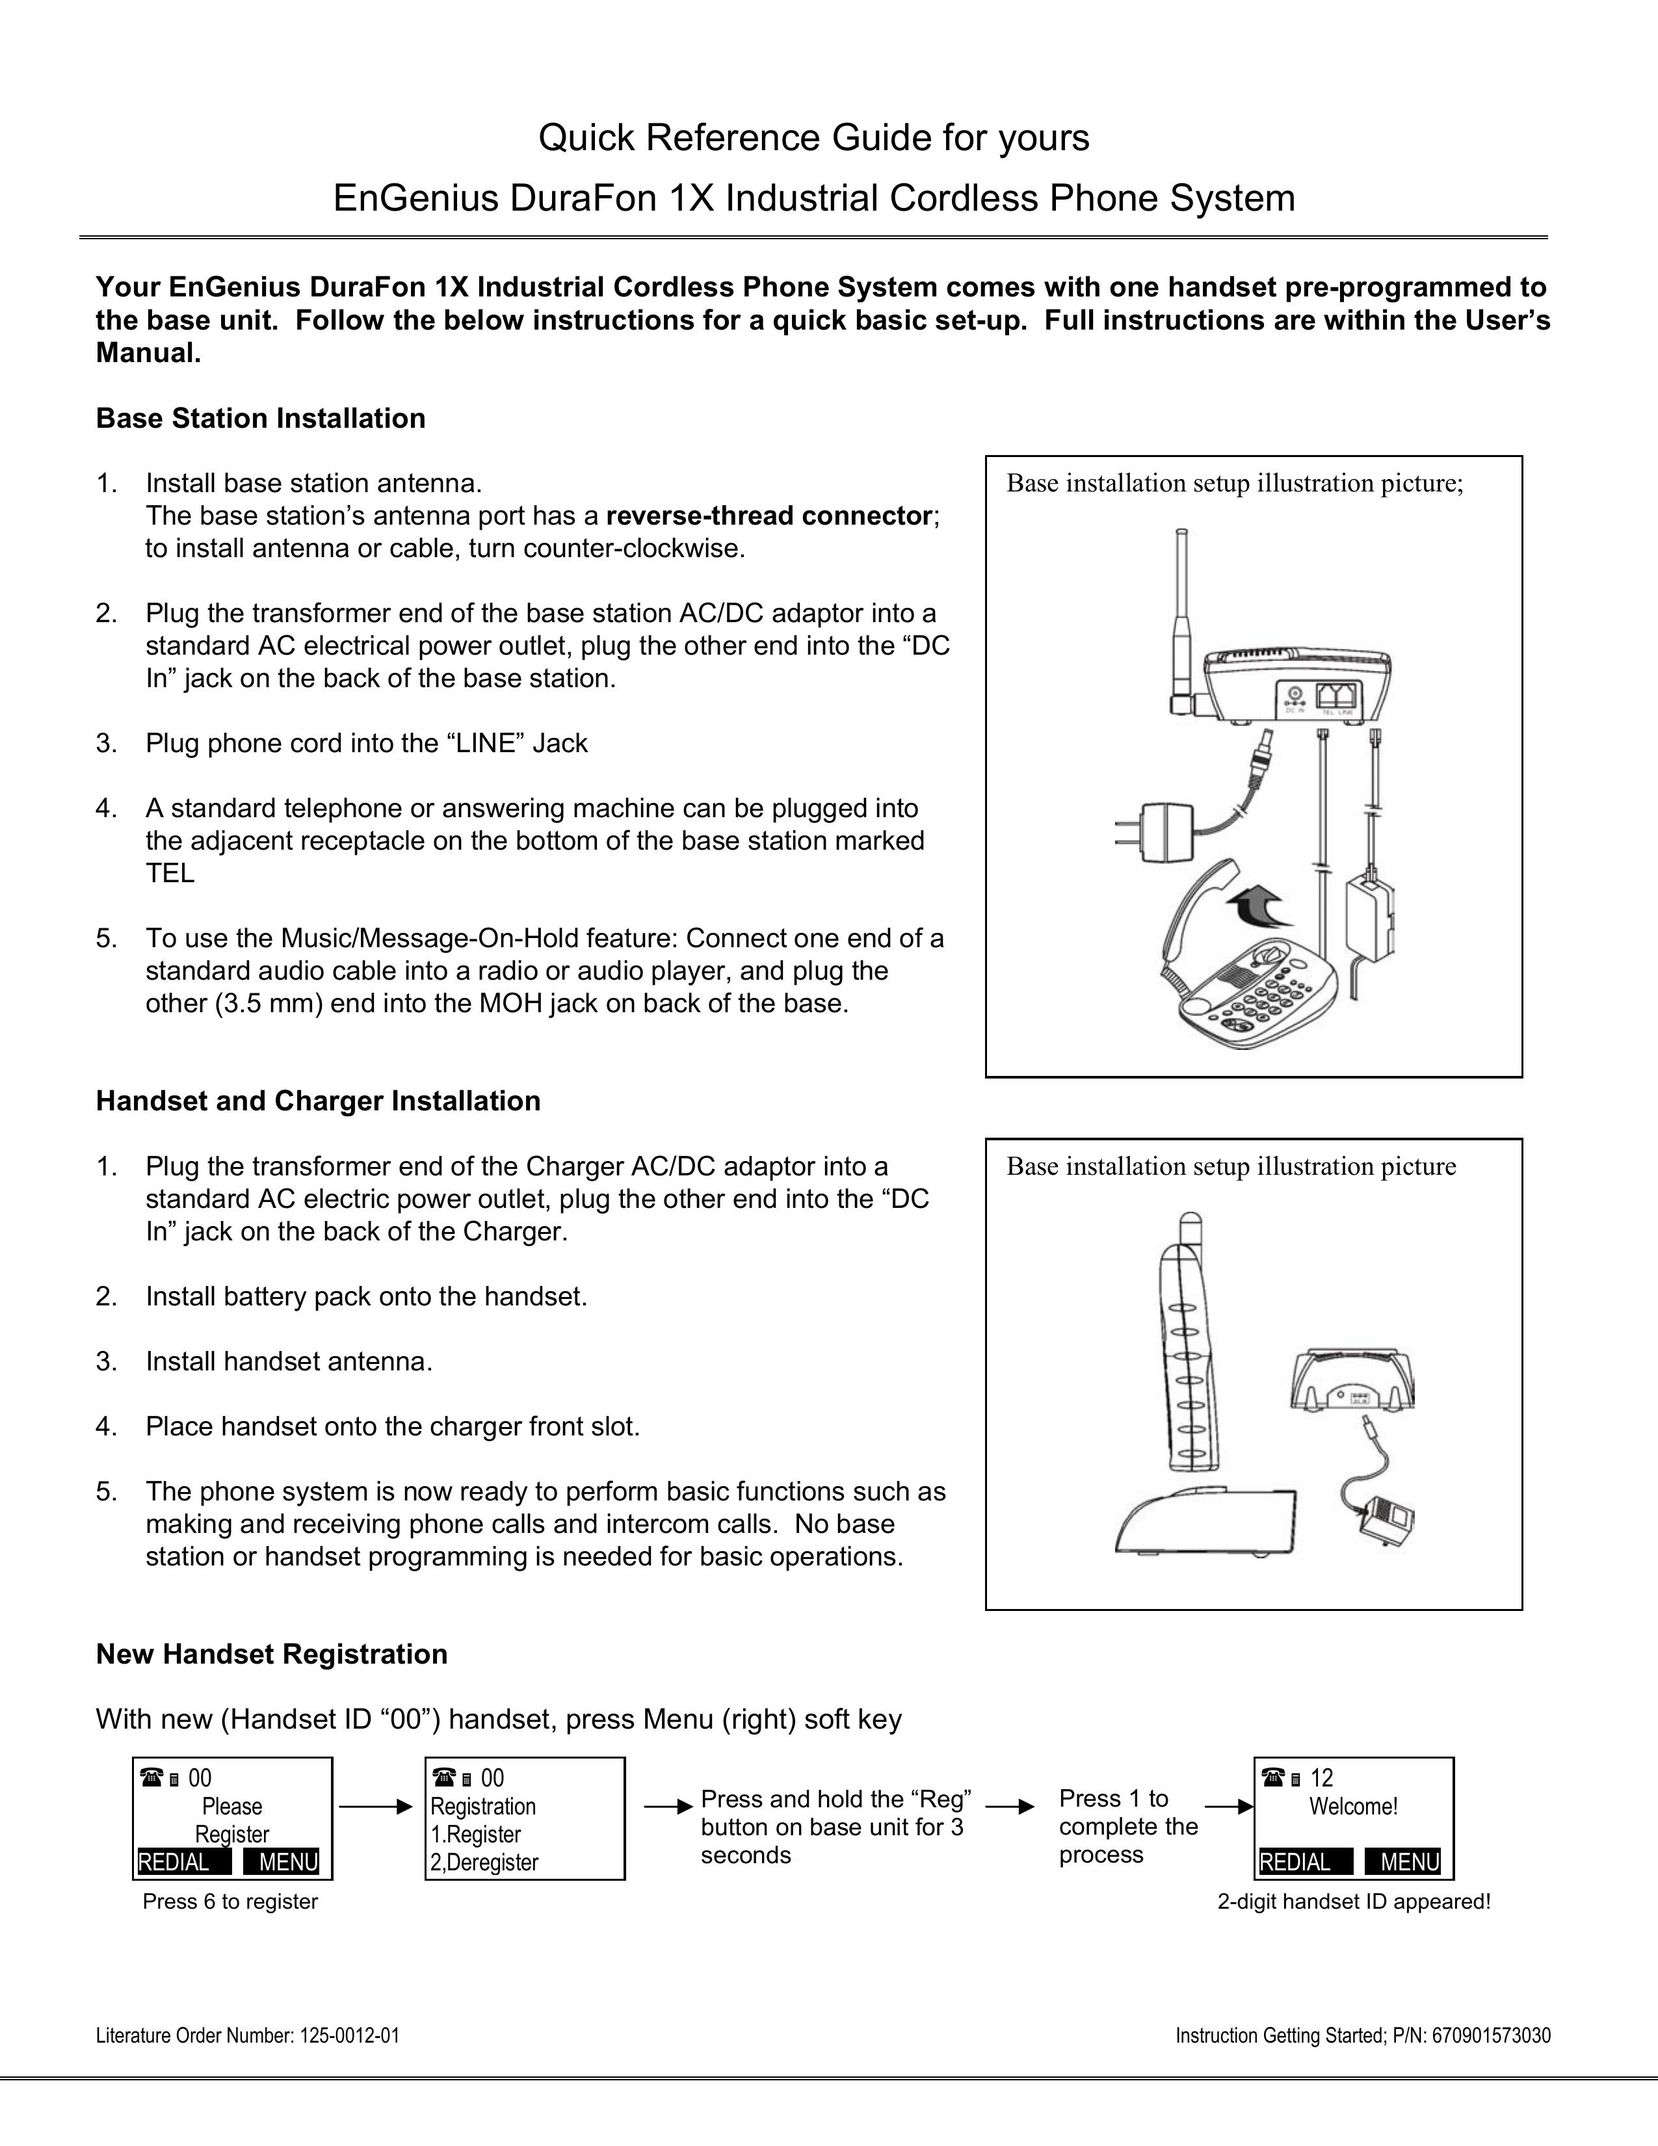 EnGenius Technologies DURAFON1XHC Cordless Telephone User Manual